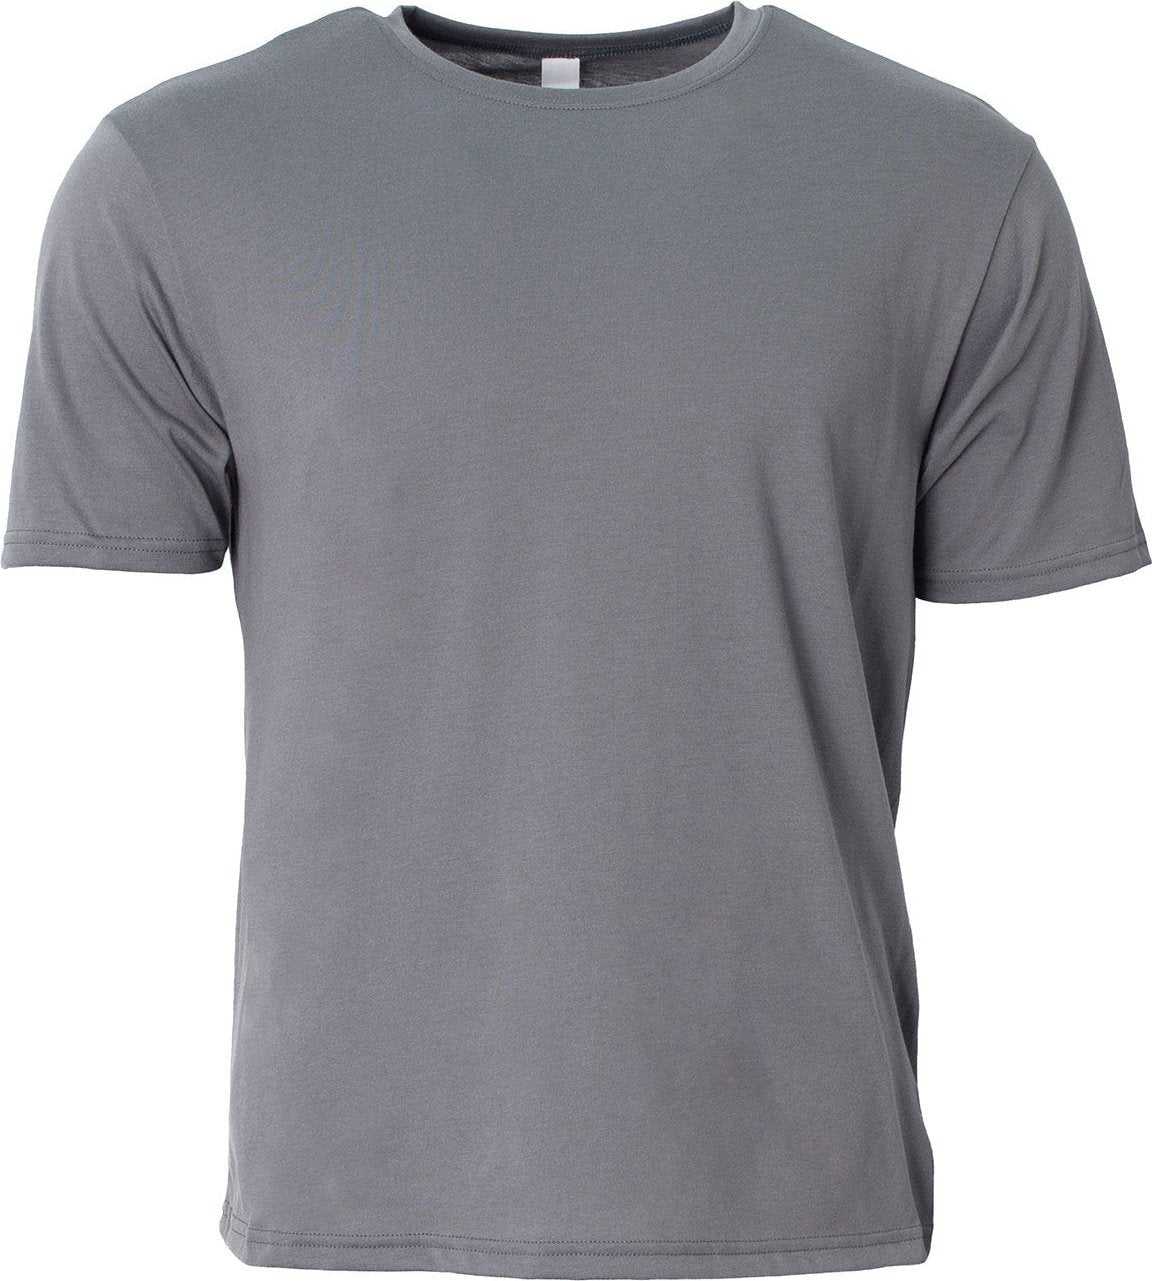 A4 N3013 Adult Softek T-Shirt - GRAPHITE - HIT a Double - 1